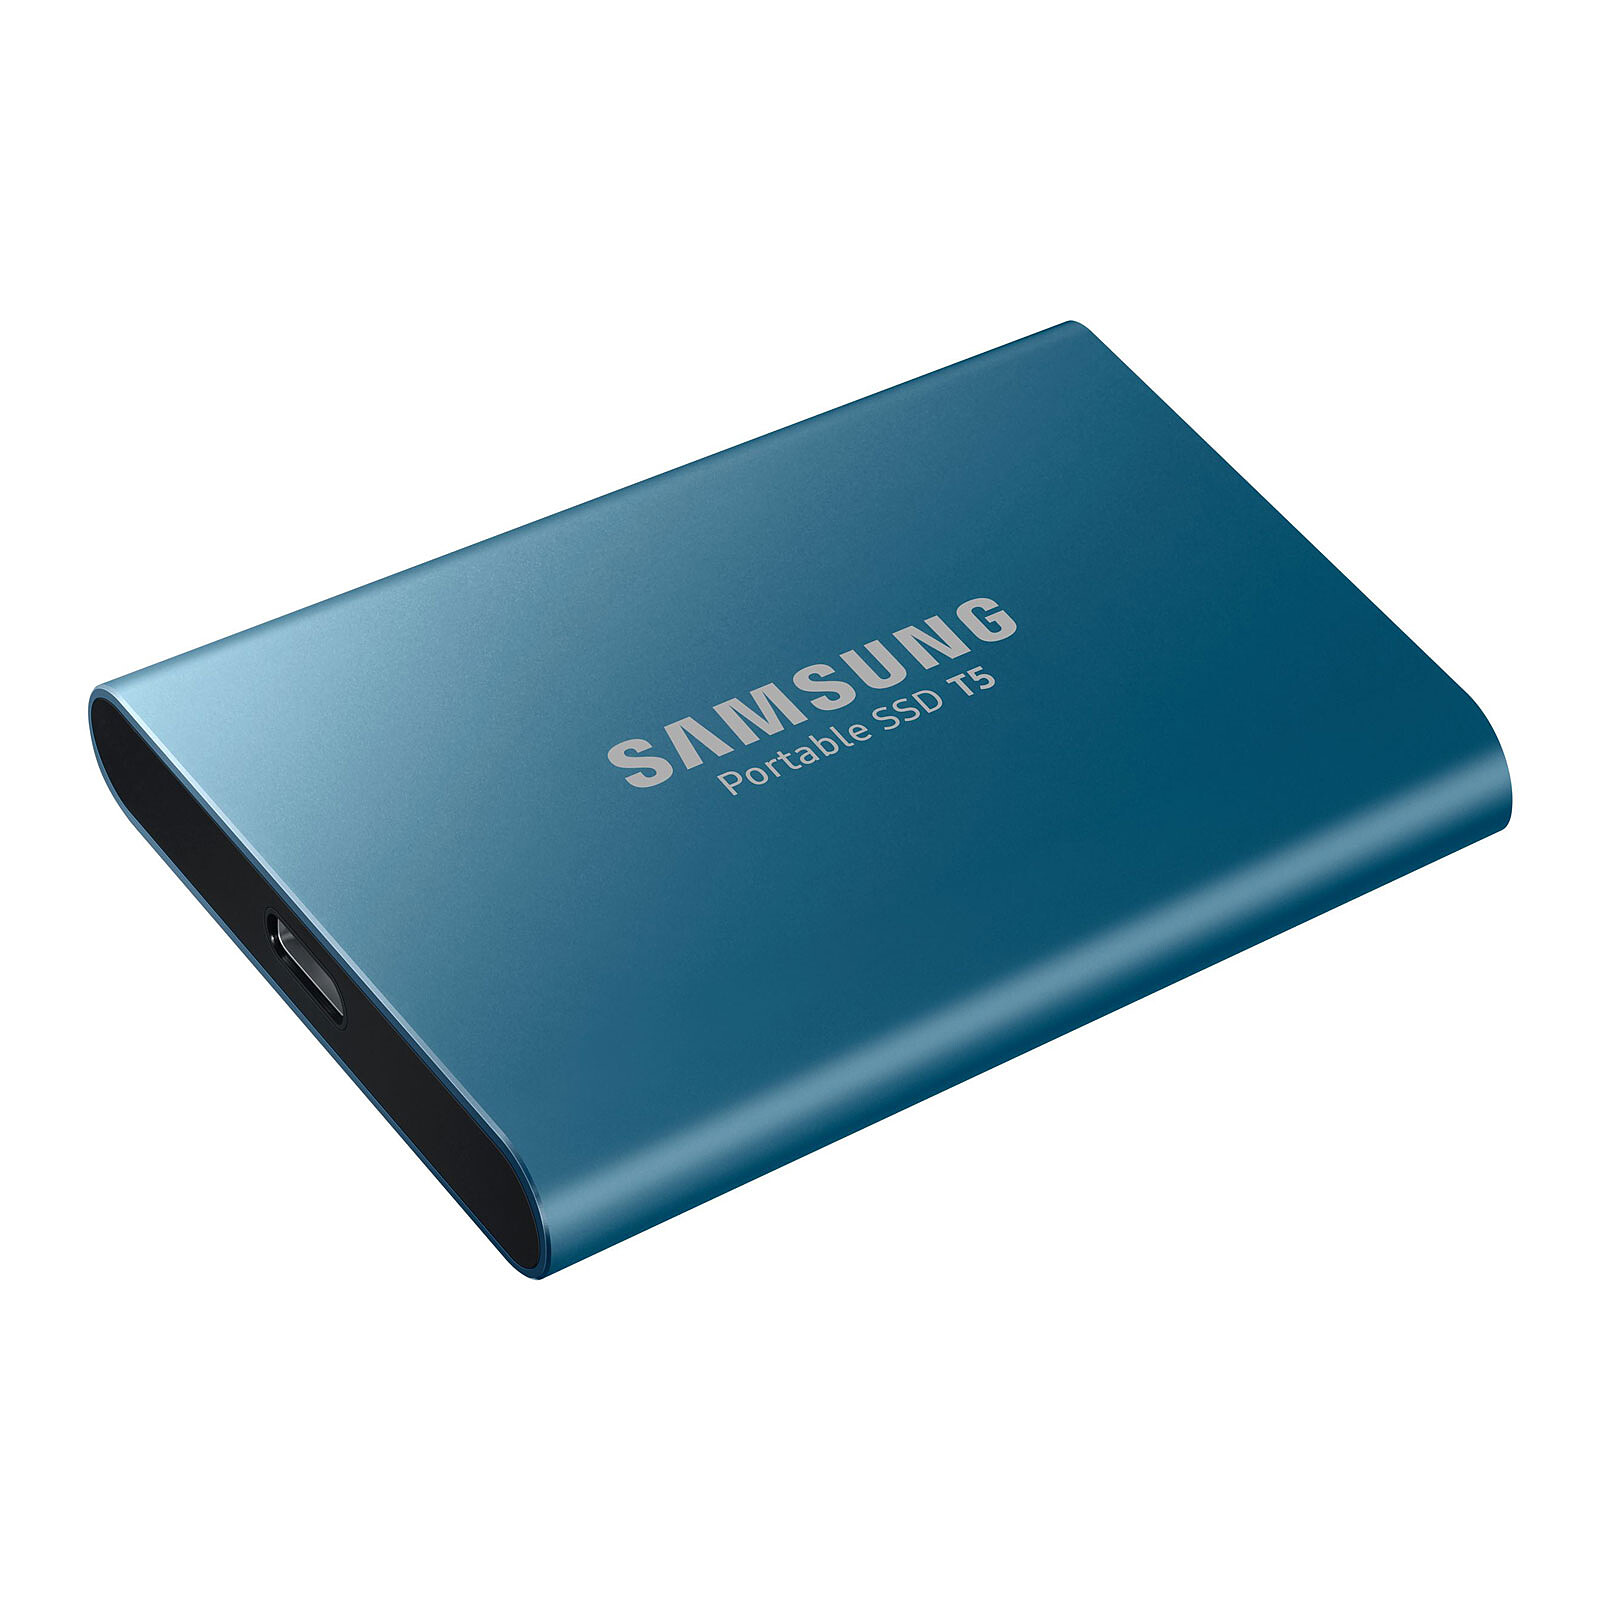 Samsung SSD T5 - External hard drive Samsung on LDLC | Holy Moley